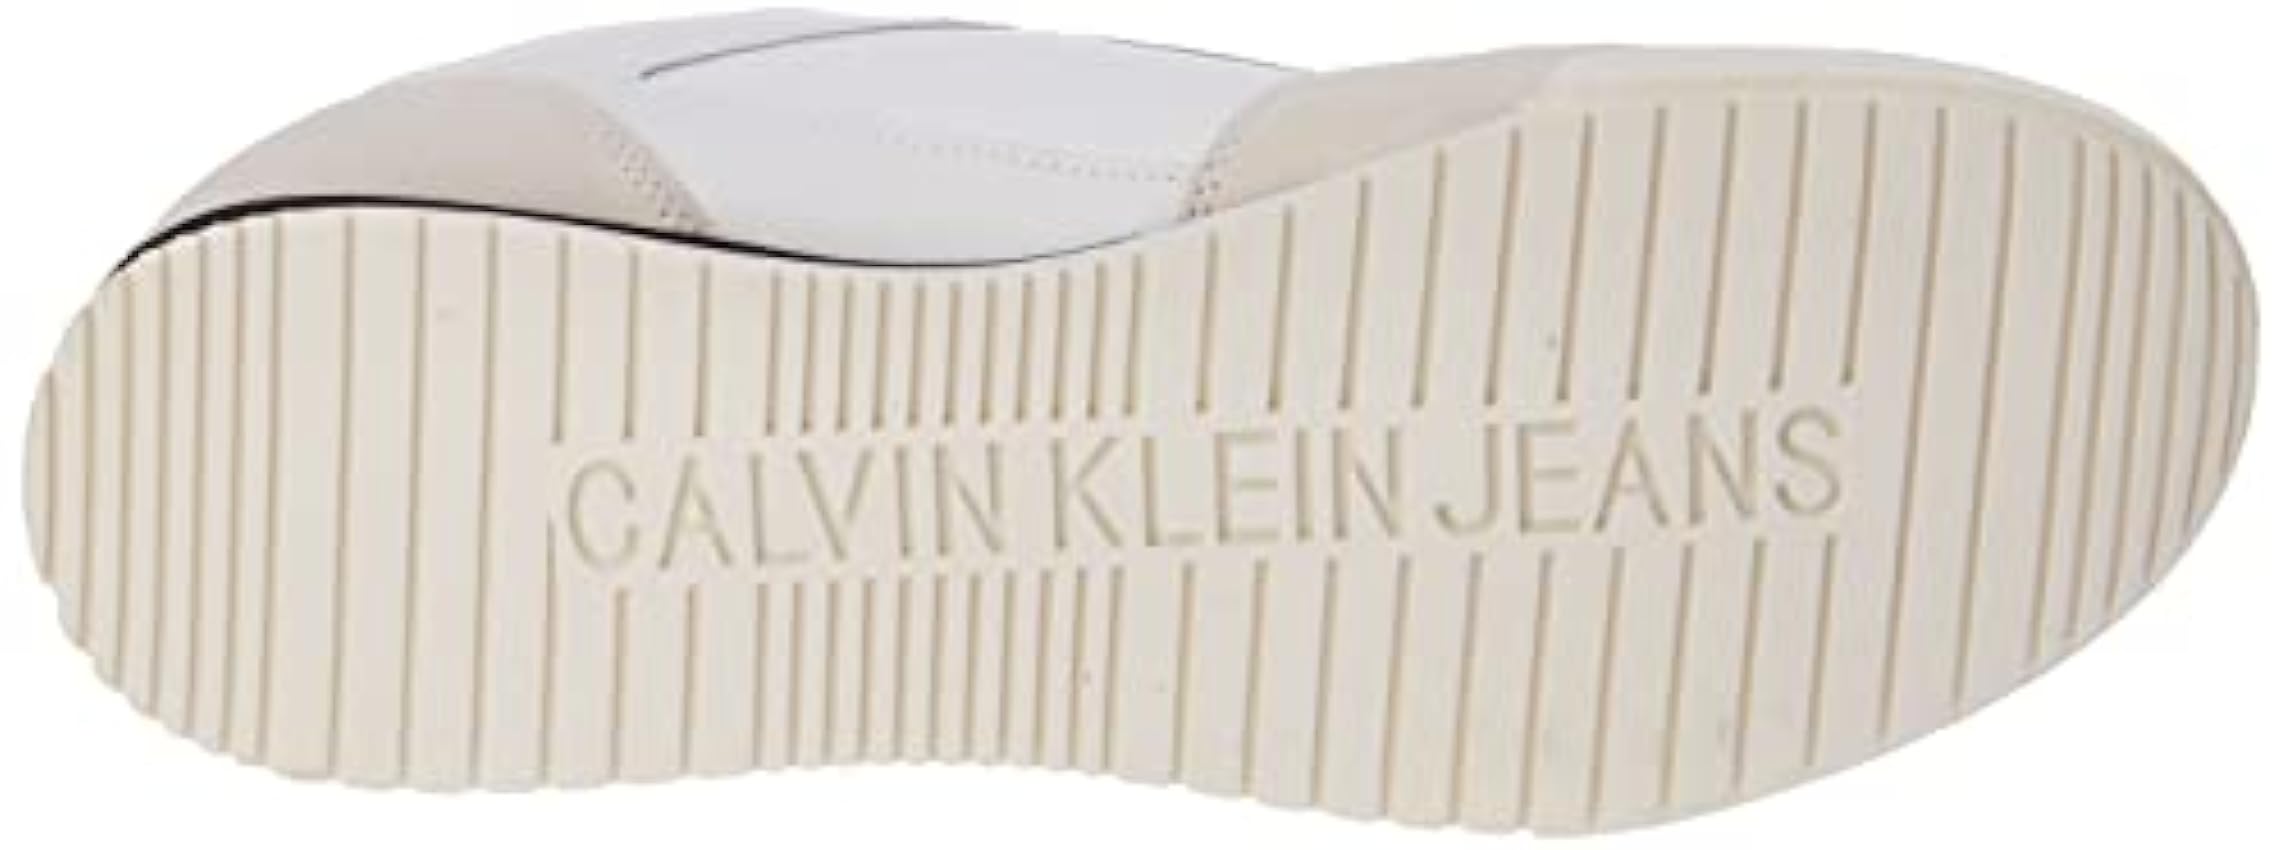 Calvin Klein Jeans Hombre Sneaker de perfil bajo Zapatillas n9DmSccQ